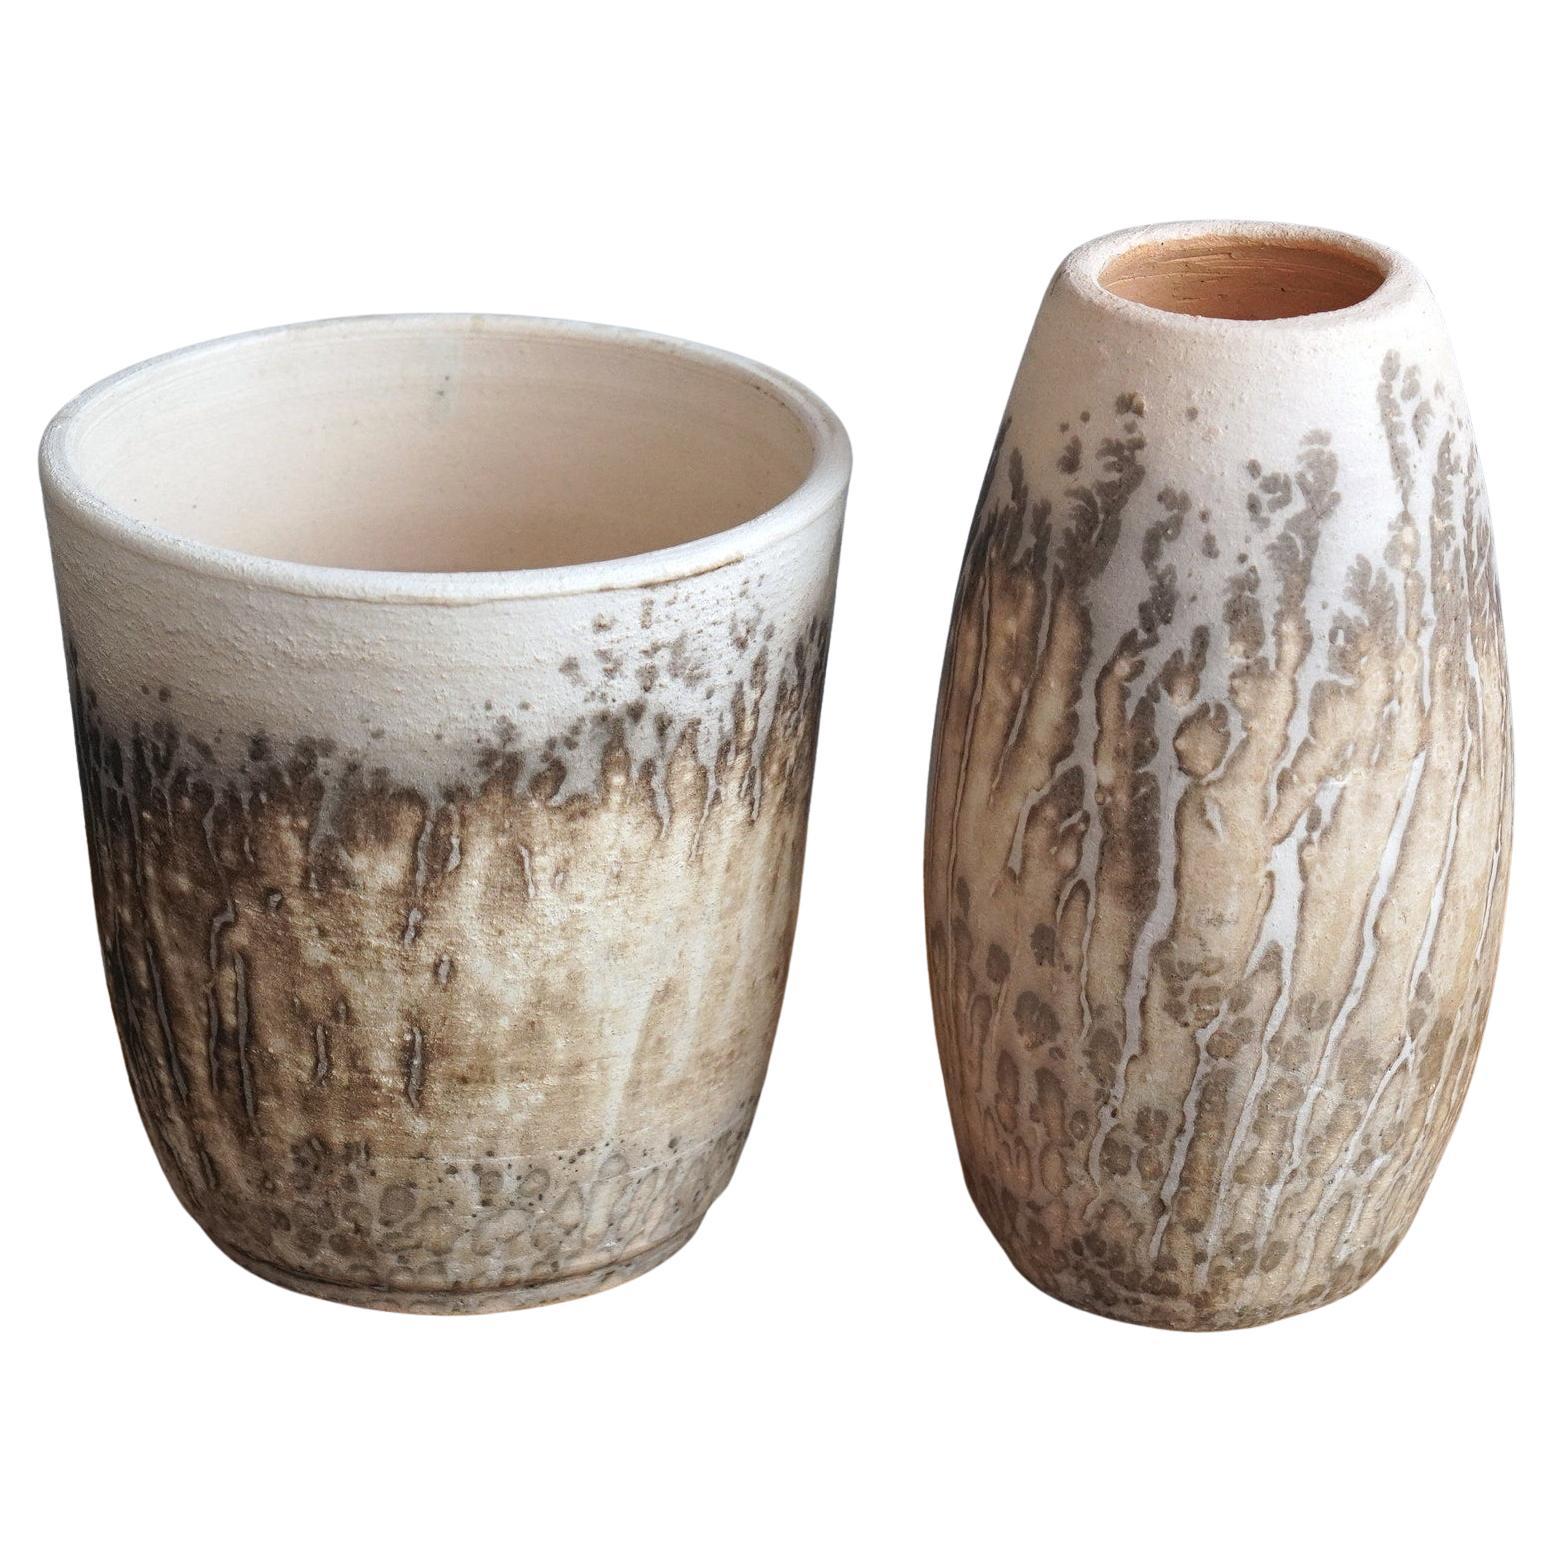 Shinsen & Tsuri Raku Pottery Vase - Obvara - Handmade Ceramic Home Decor